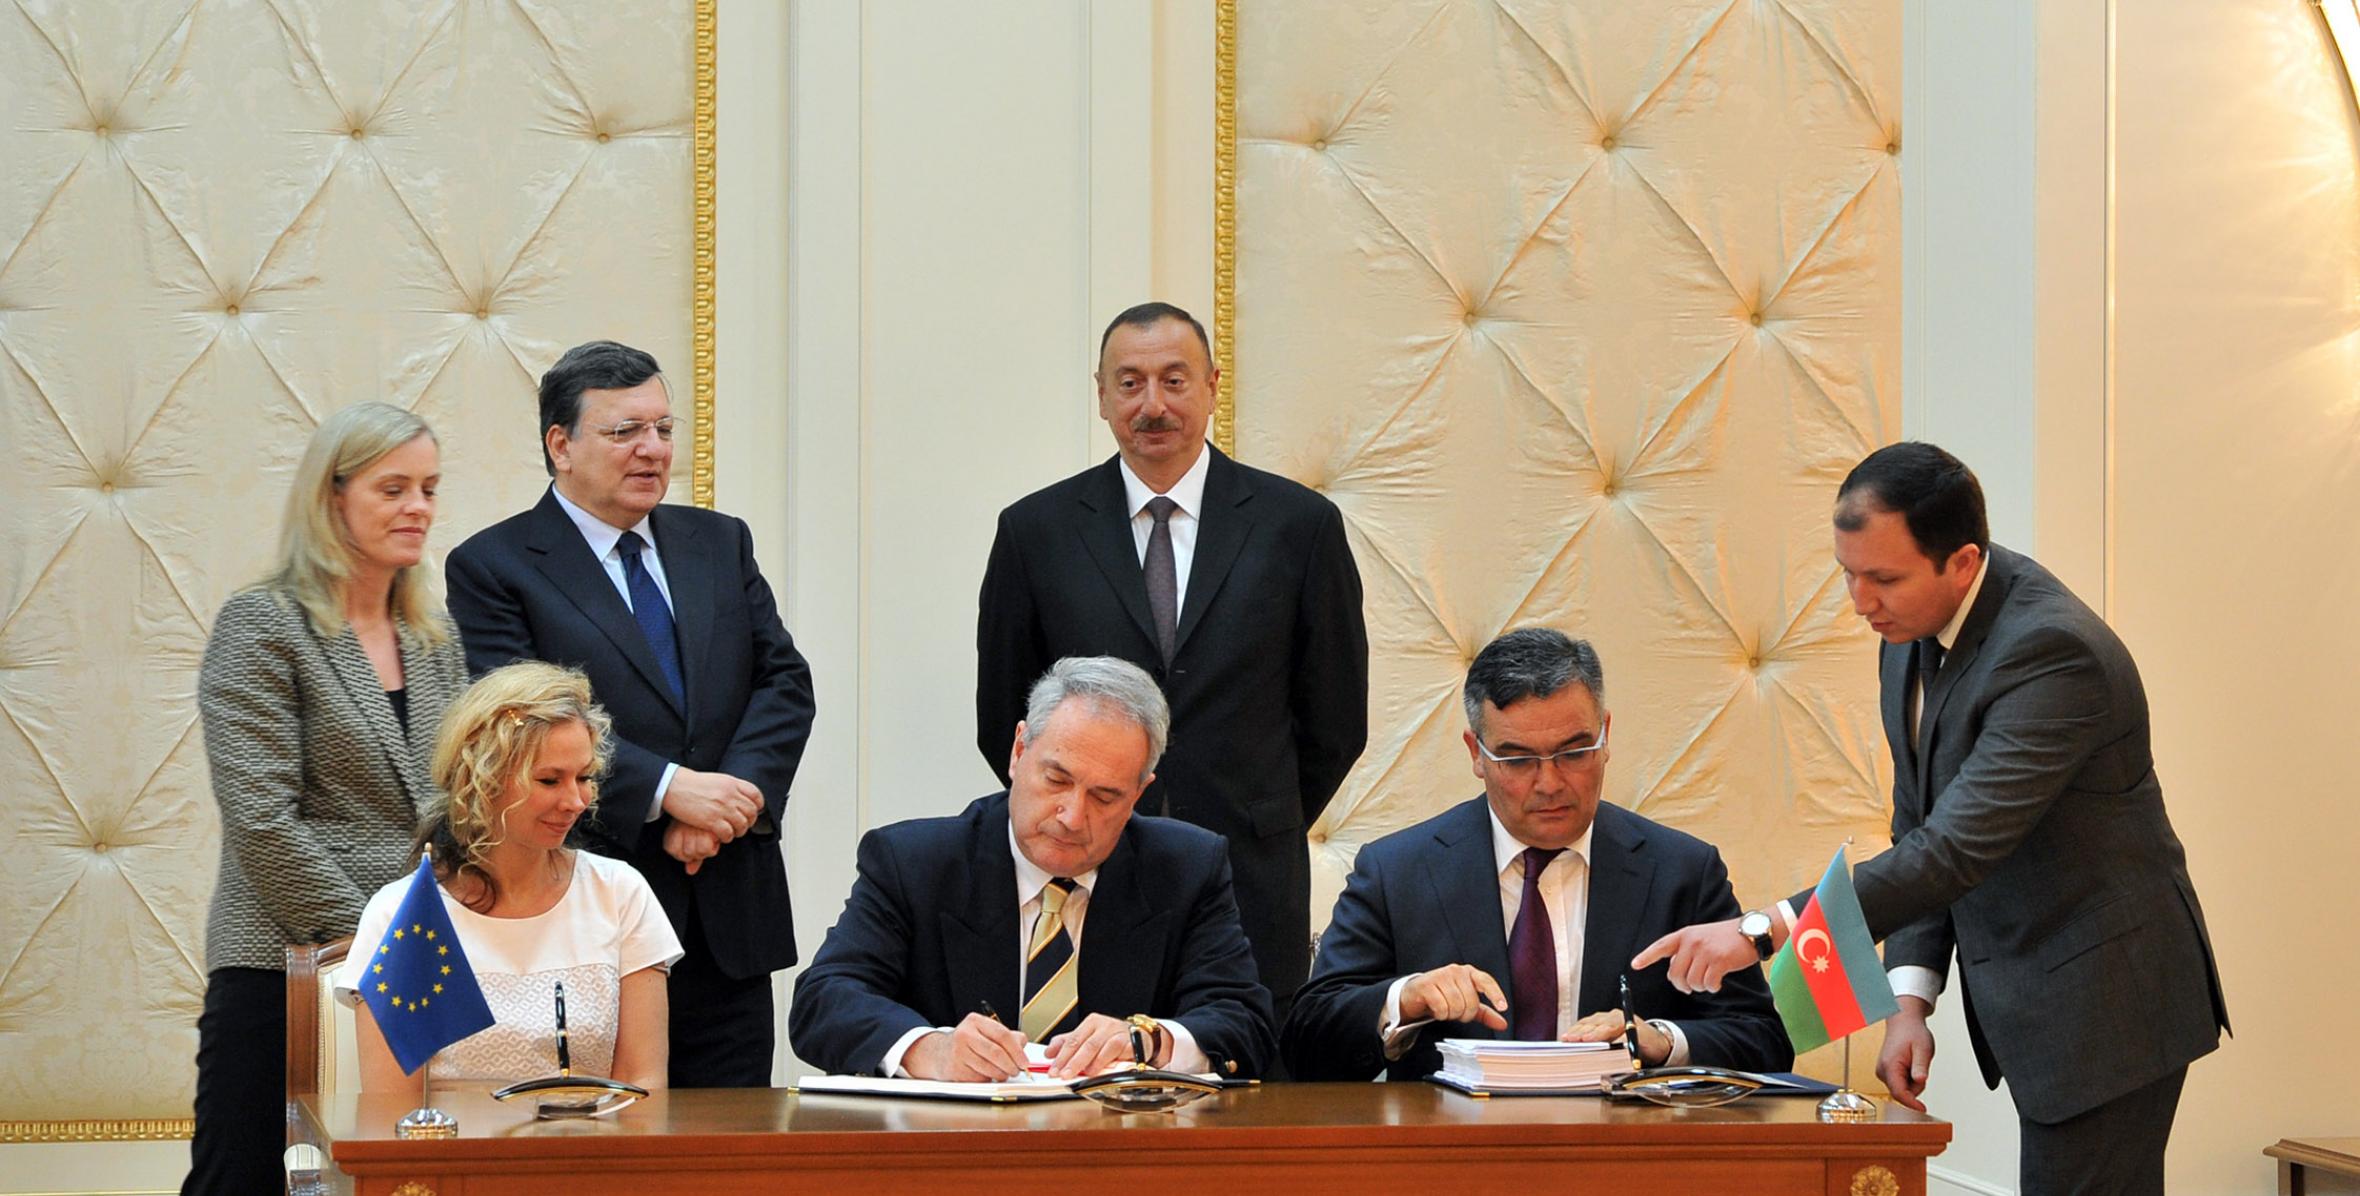 Azerbaijan, the European Union signed a document